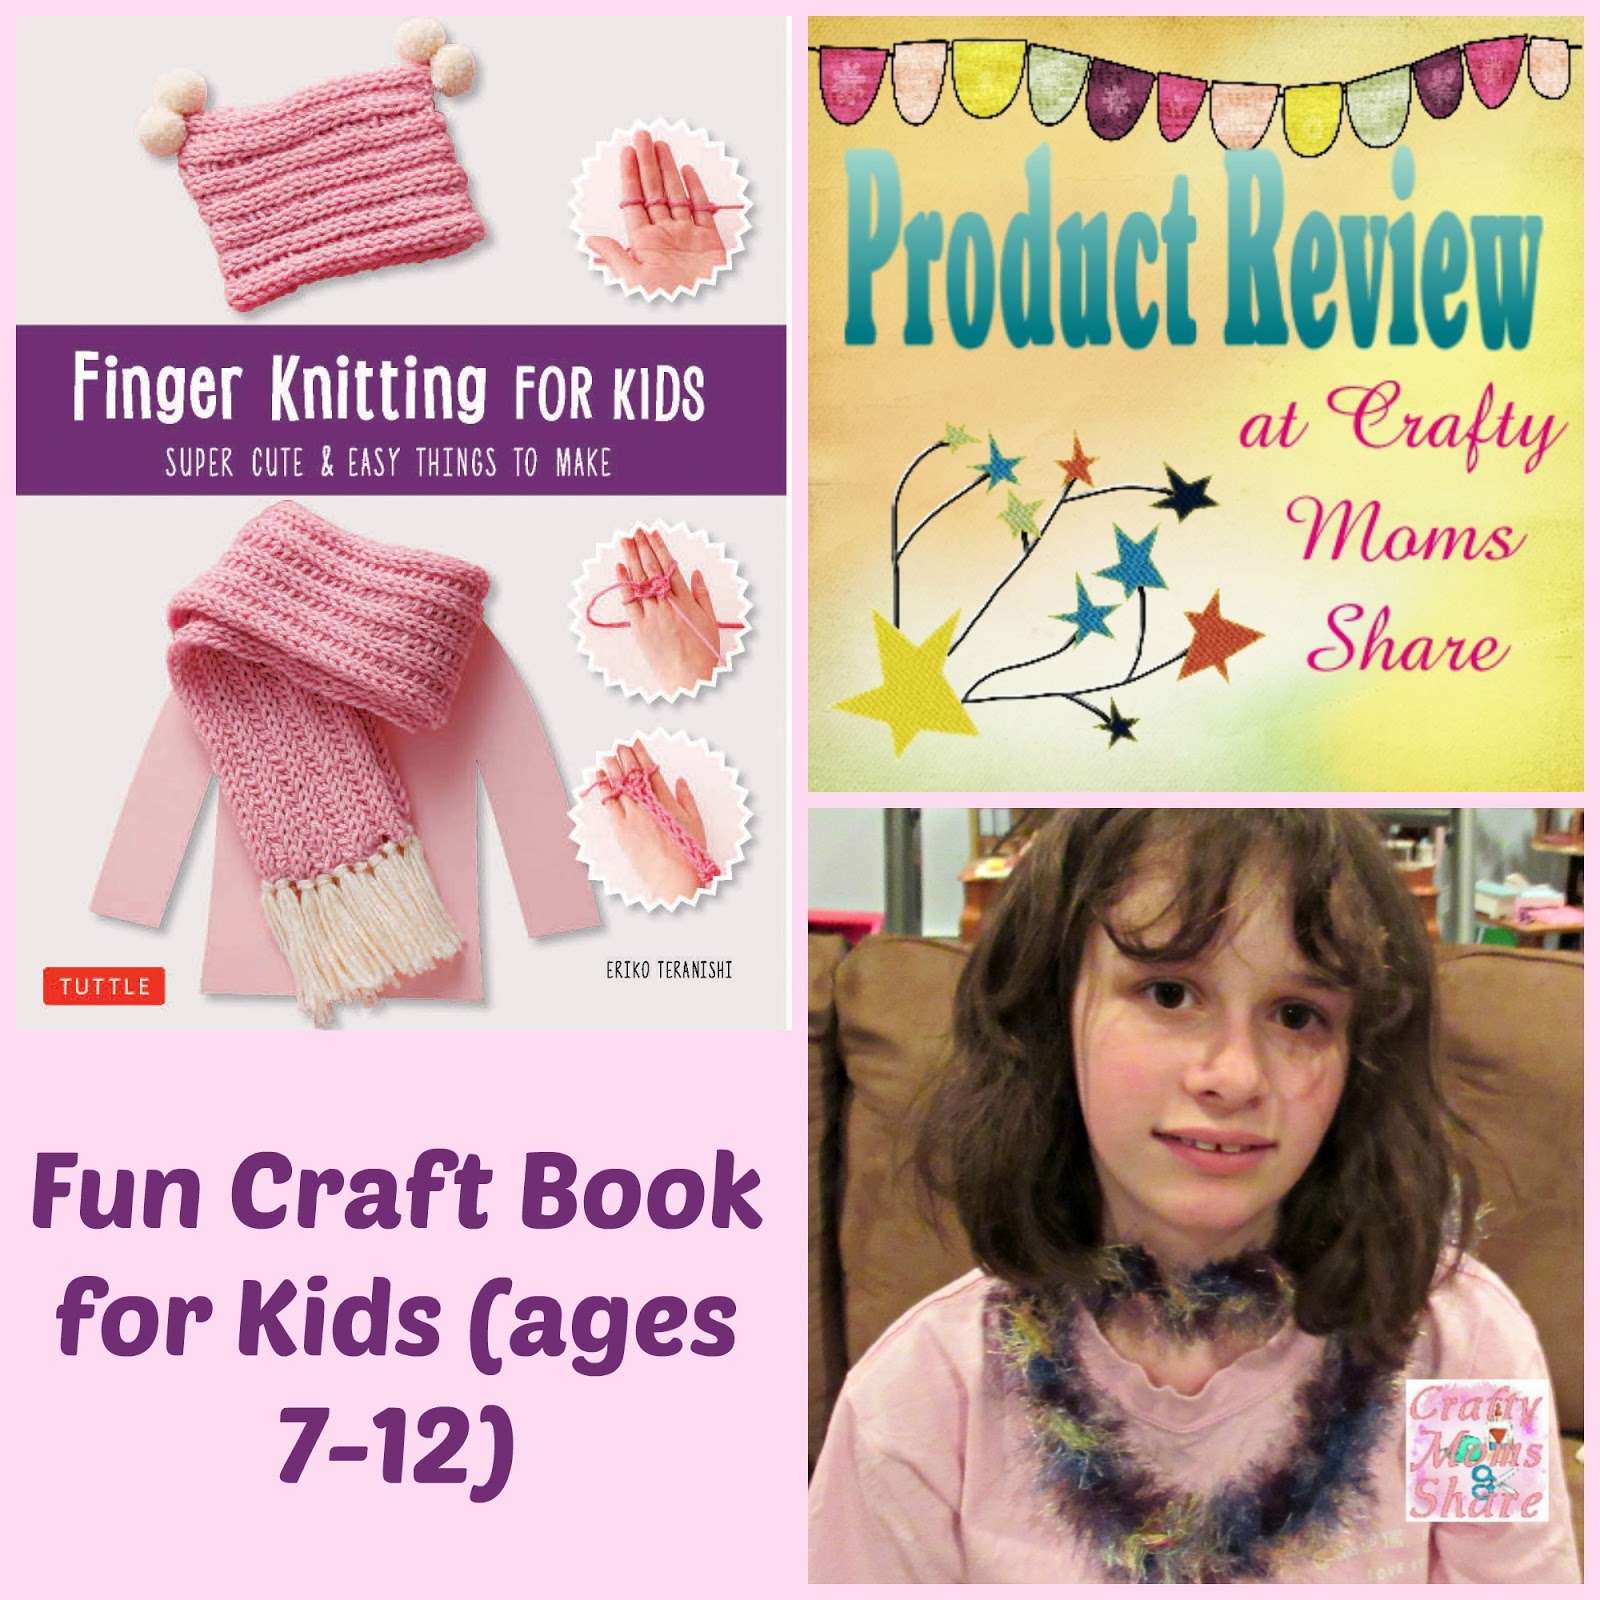 5 Reasons Your Kids Should Finger Knit!